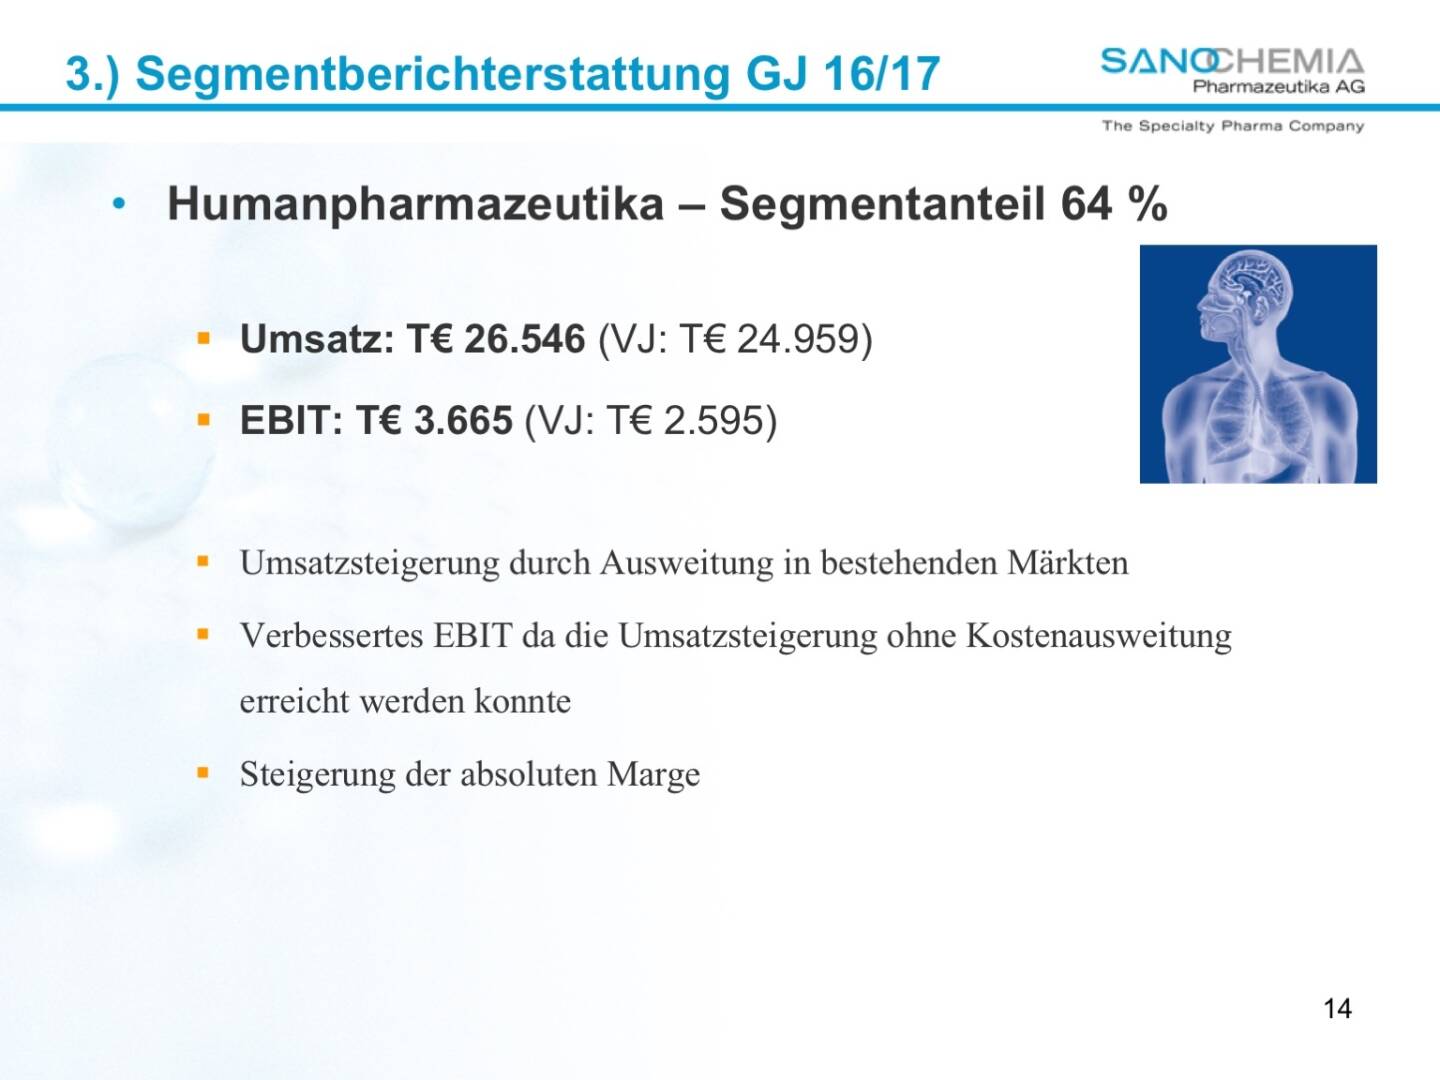 Präsentation Sanochemia - Humanpharmazeutika